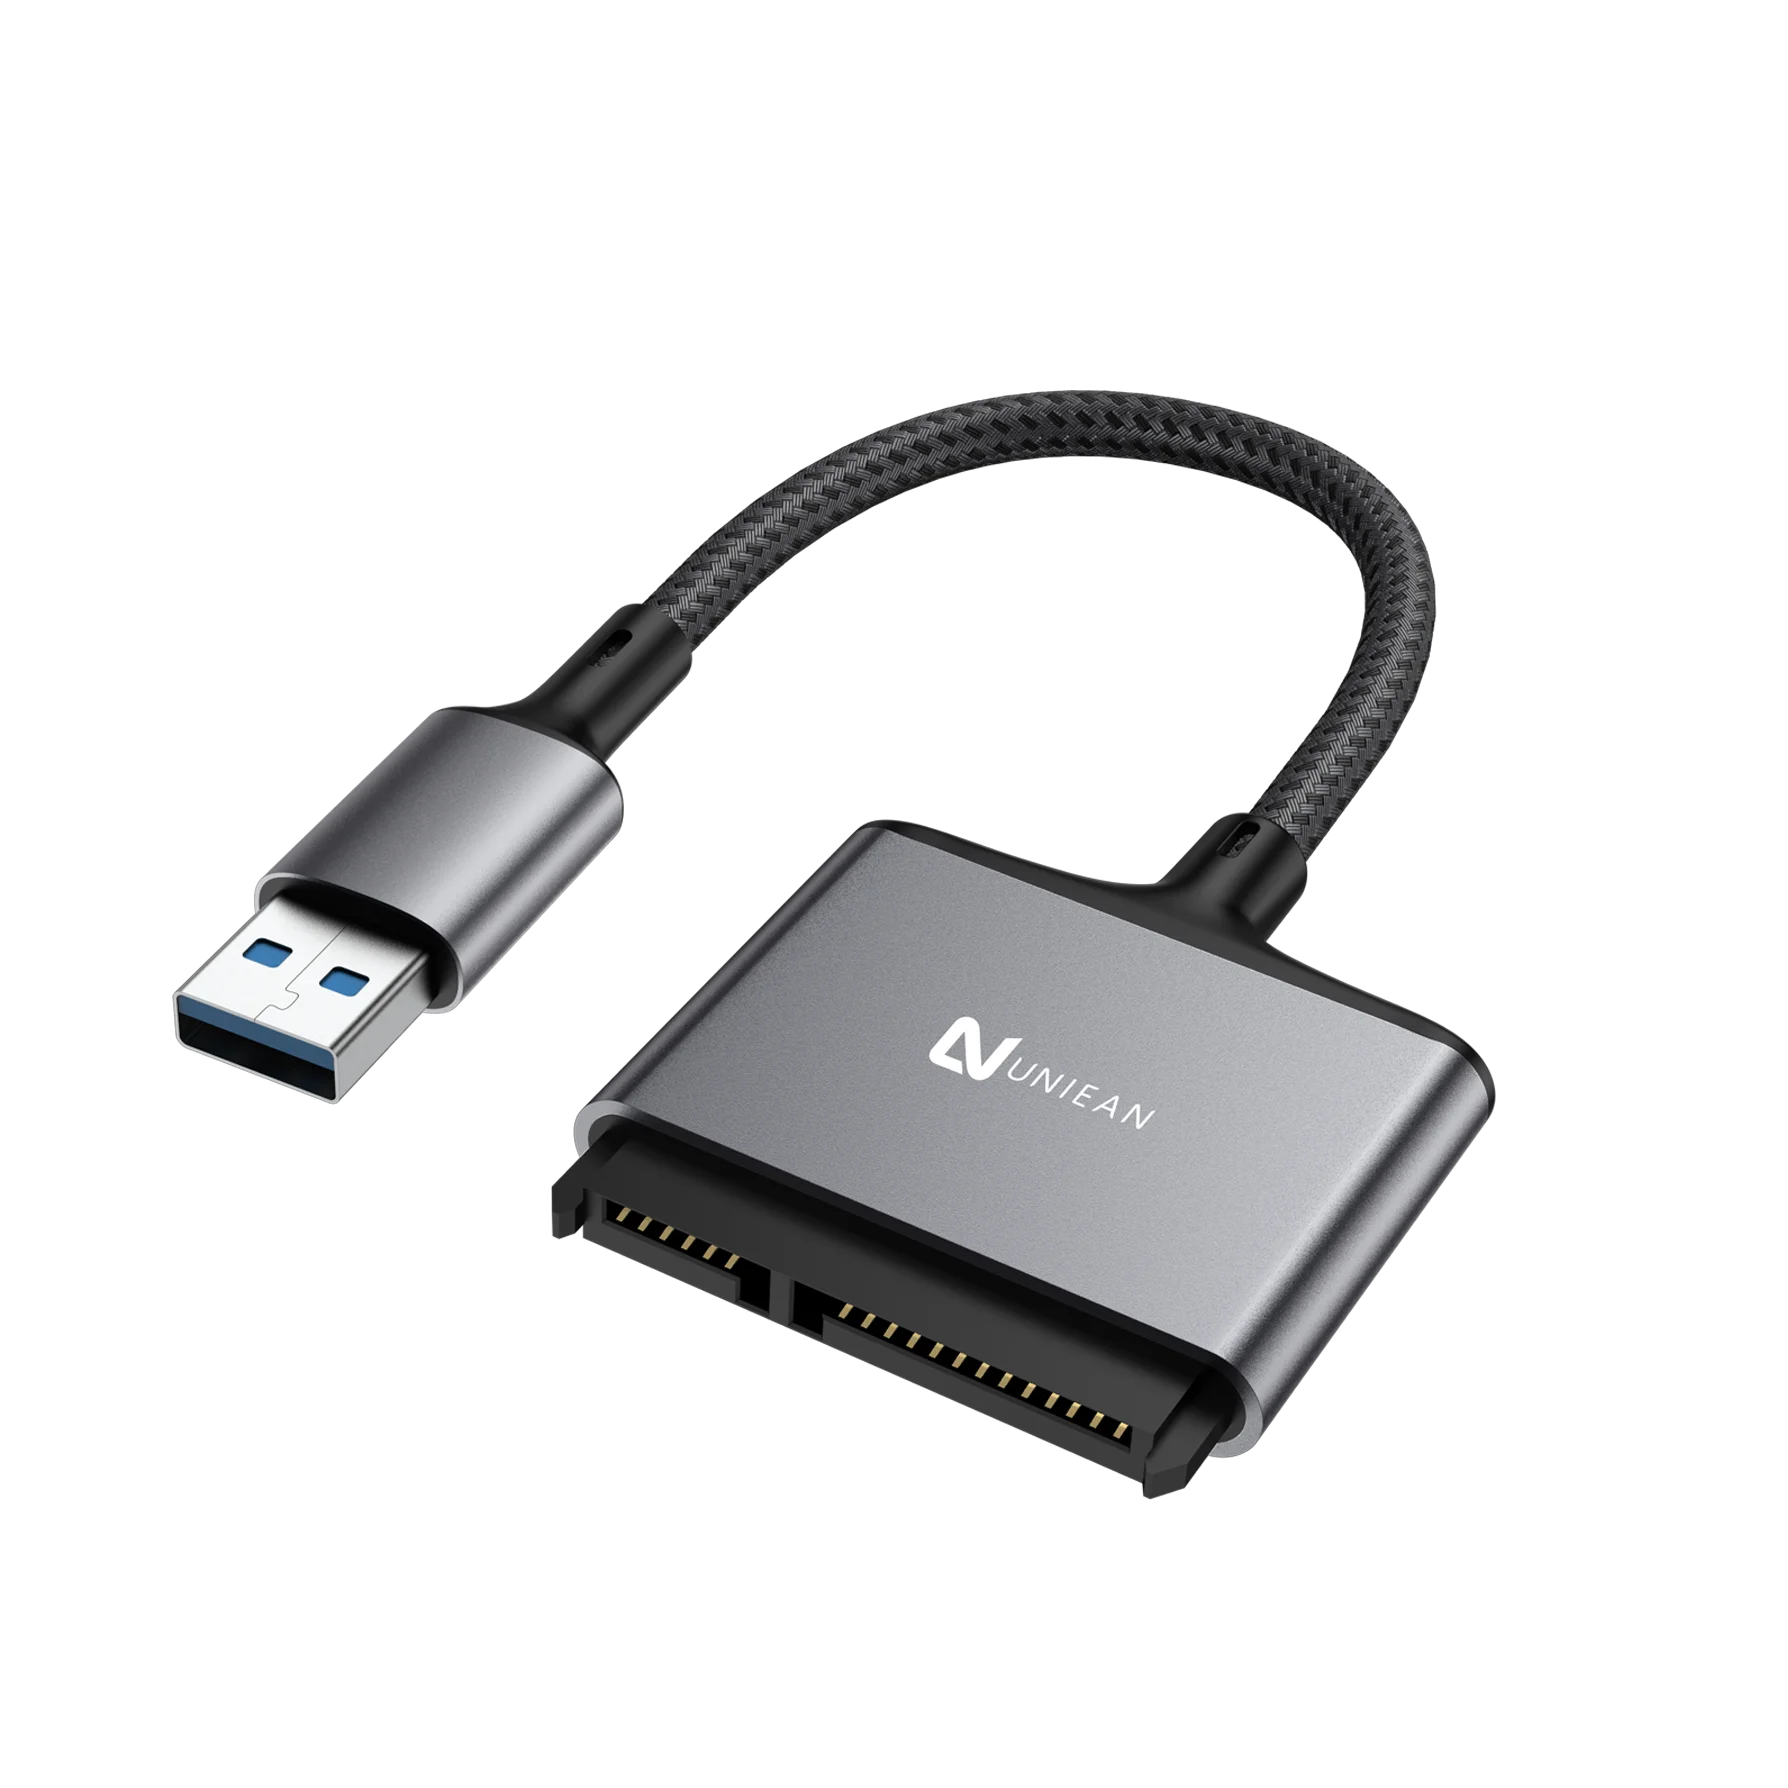 

UNIEAN Laptop Usb 3.0 To Sata External Converter Cable For 2.5" Sata Drives External Hard Drive Adapter Usb3.0 To Sata 2.5 Cable